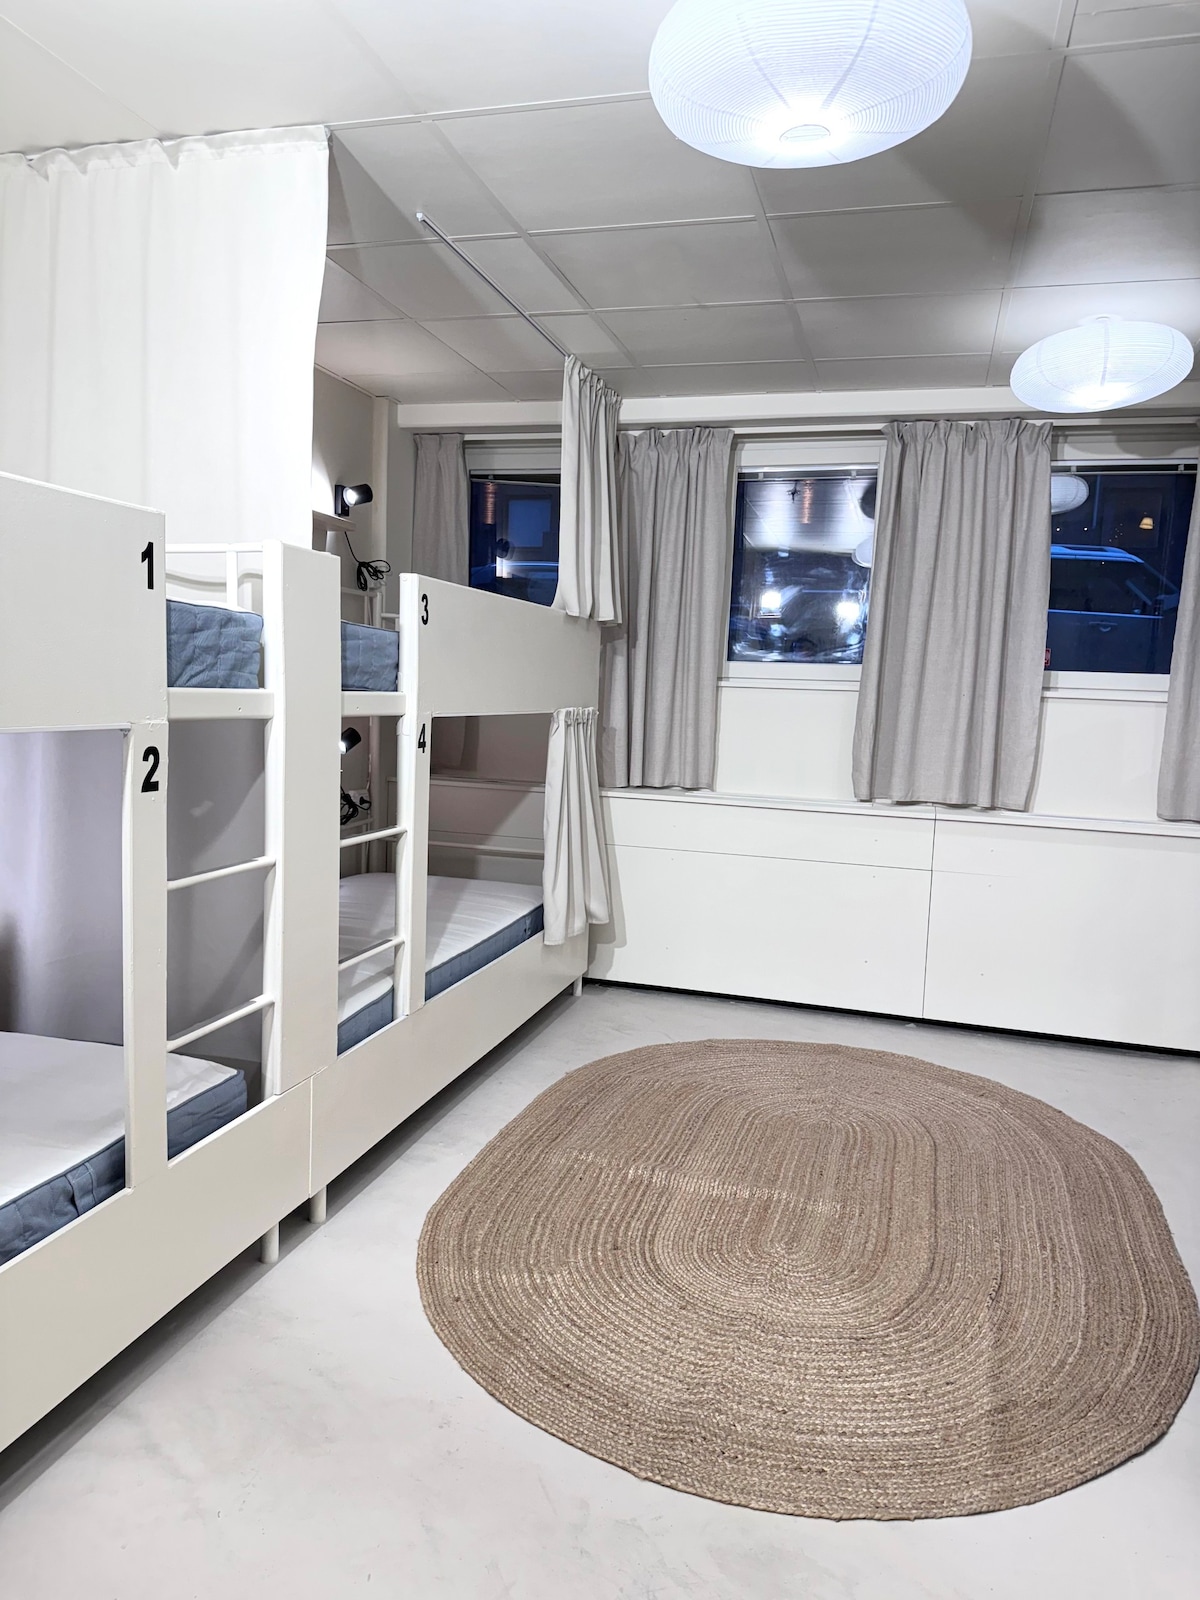 Nomad Gardet: 6 Bed Mixed Dorm Room